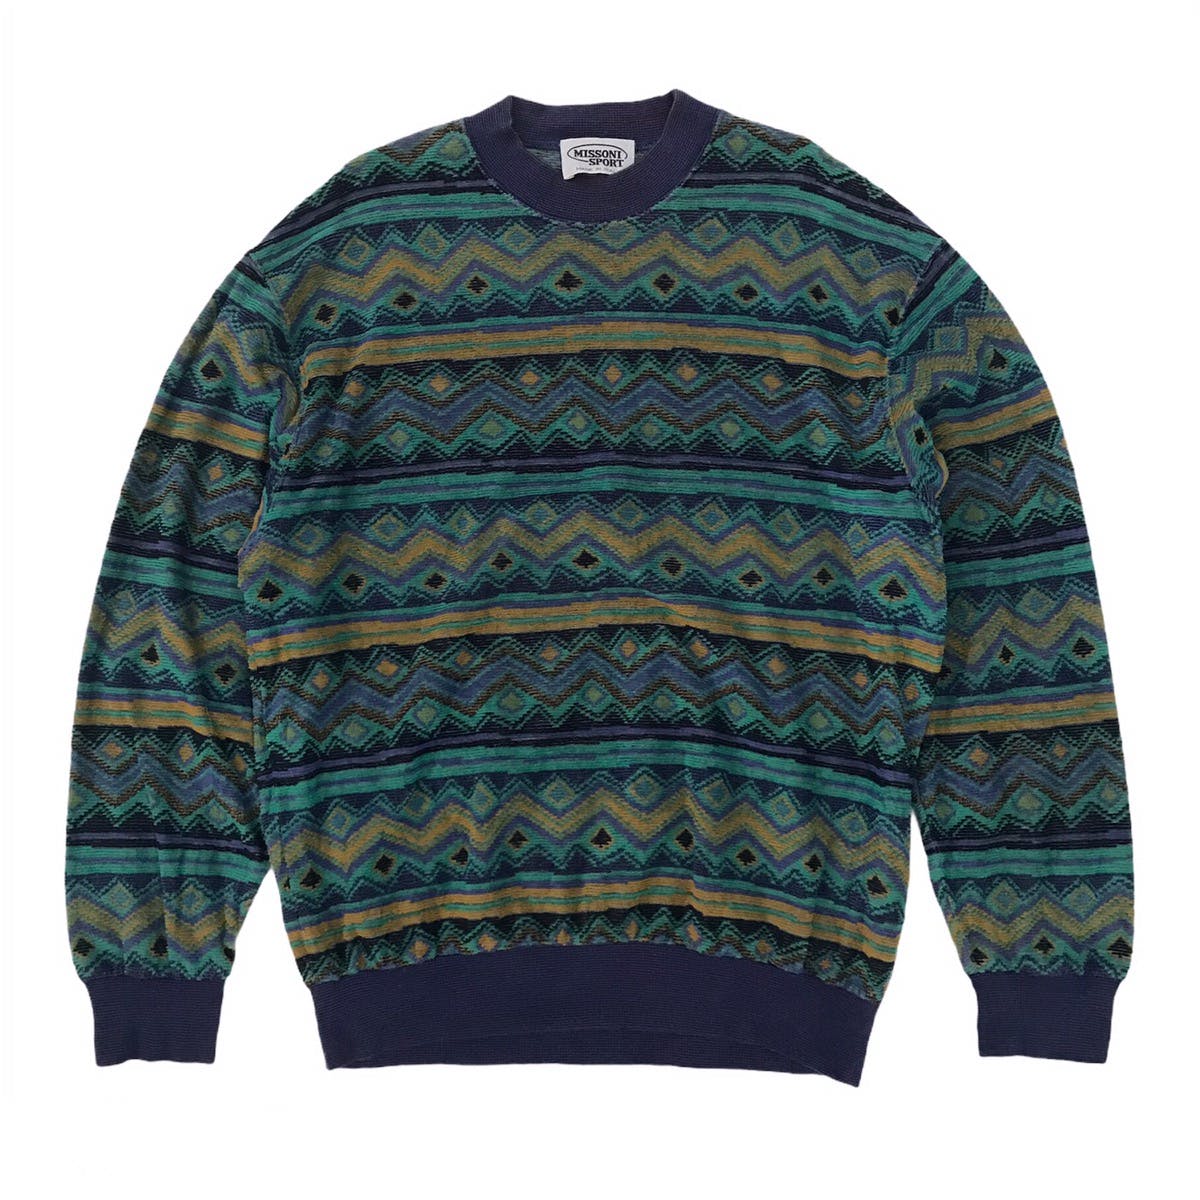 Missoni Sport Cozy Printed Sweater/Sweatshirt Jumper - 1